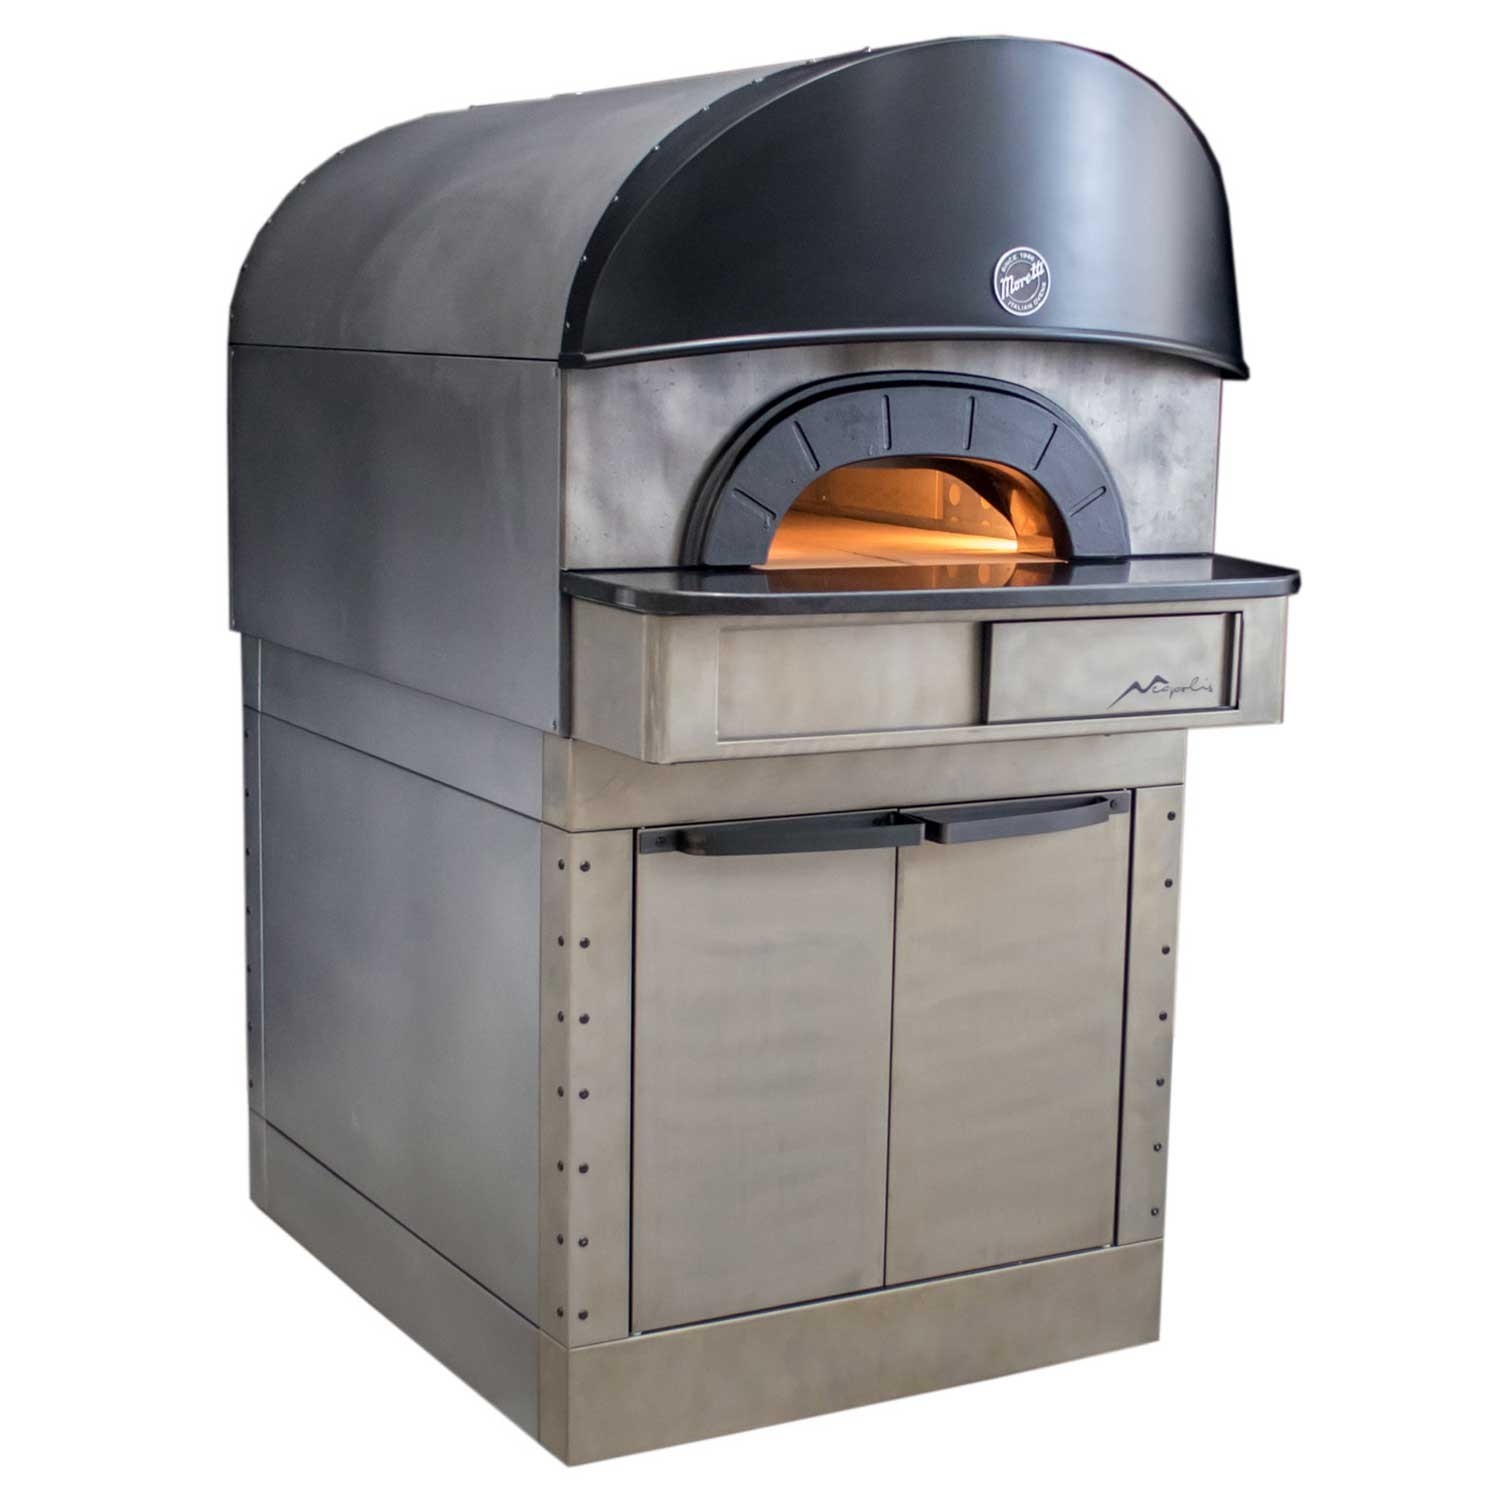 Cuptor cu o camera de coacere, model Neapolis 6, integral din samota, capacitate 6 pizza de 330mm, temperatura maxima 510 °C, putere 1500 W